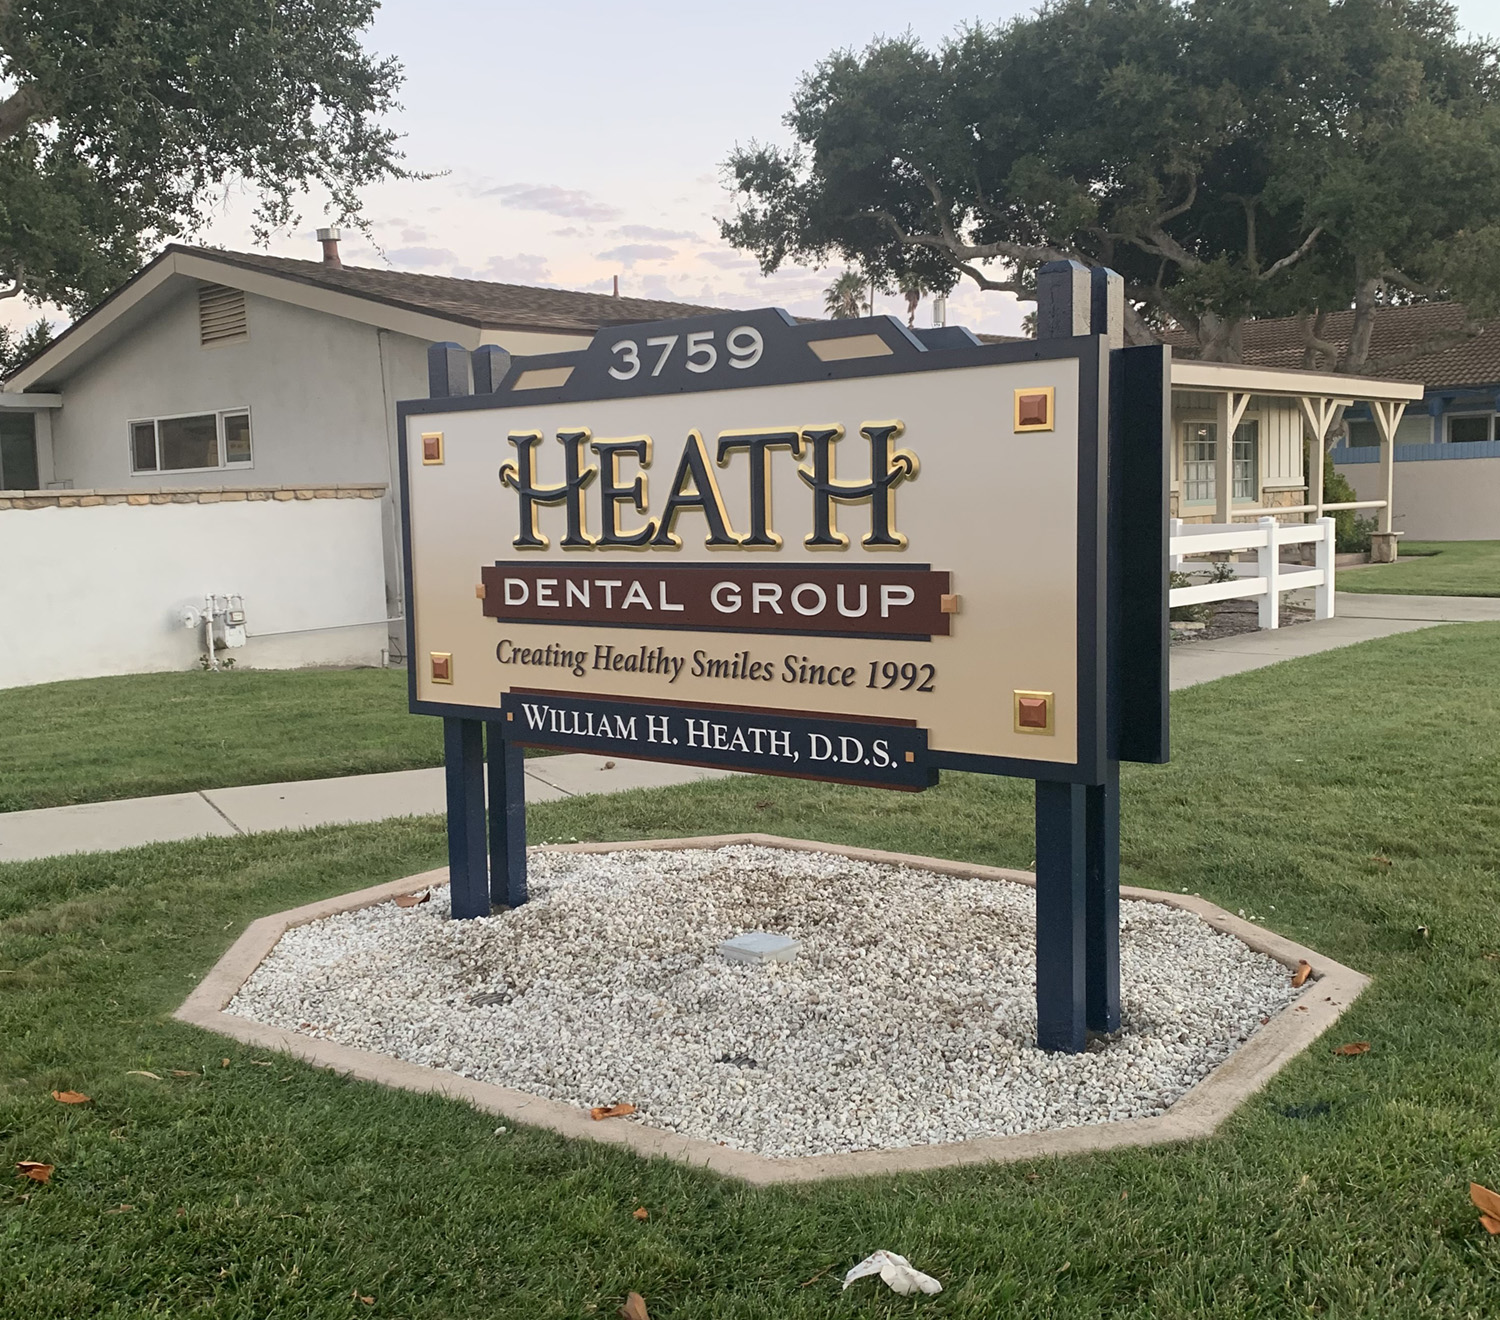 Heath Dental Group office, Vandenberg Village, CA